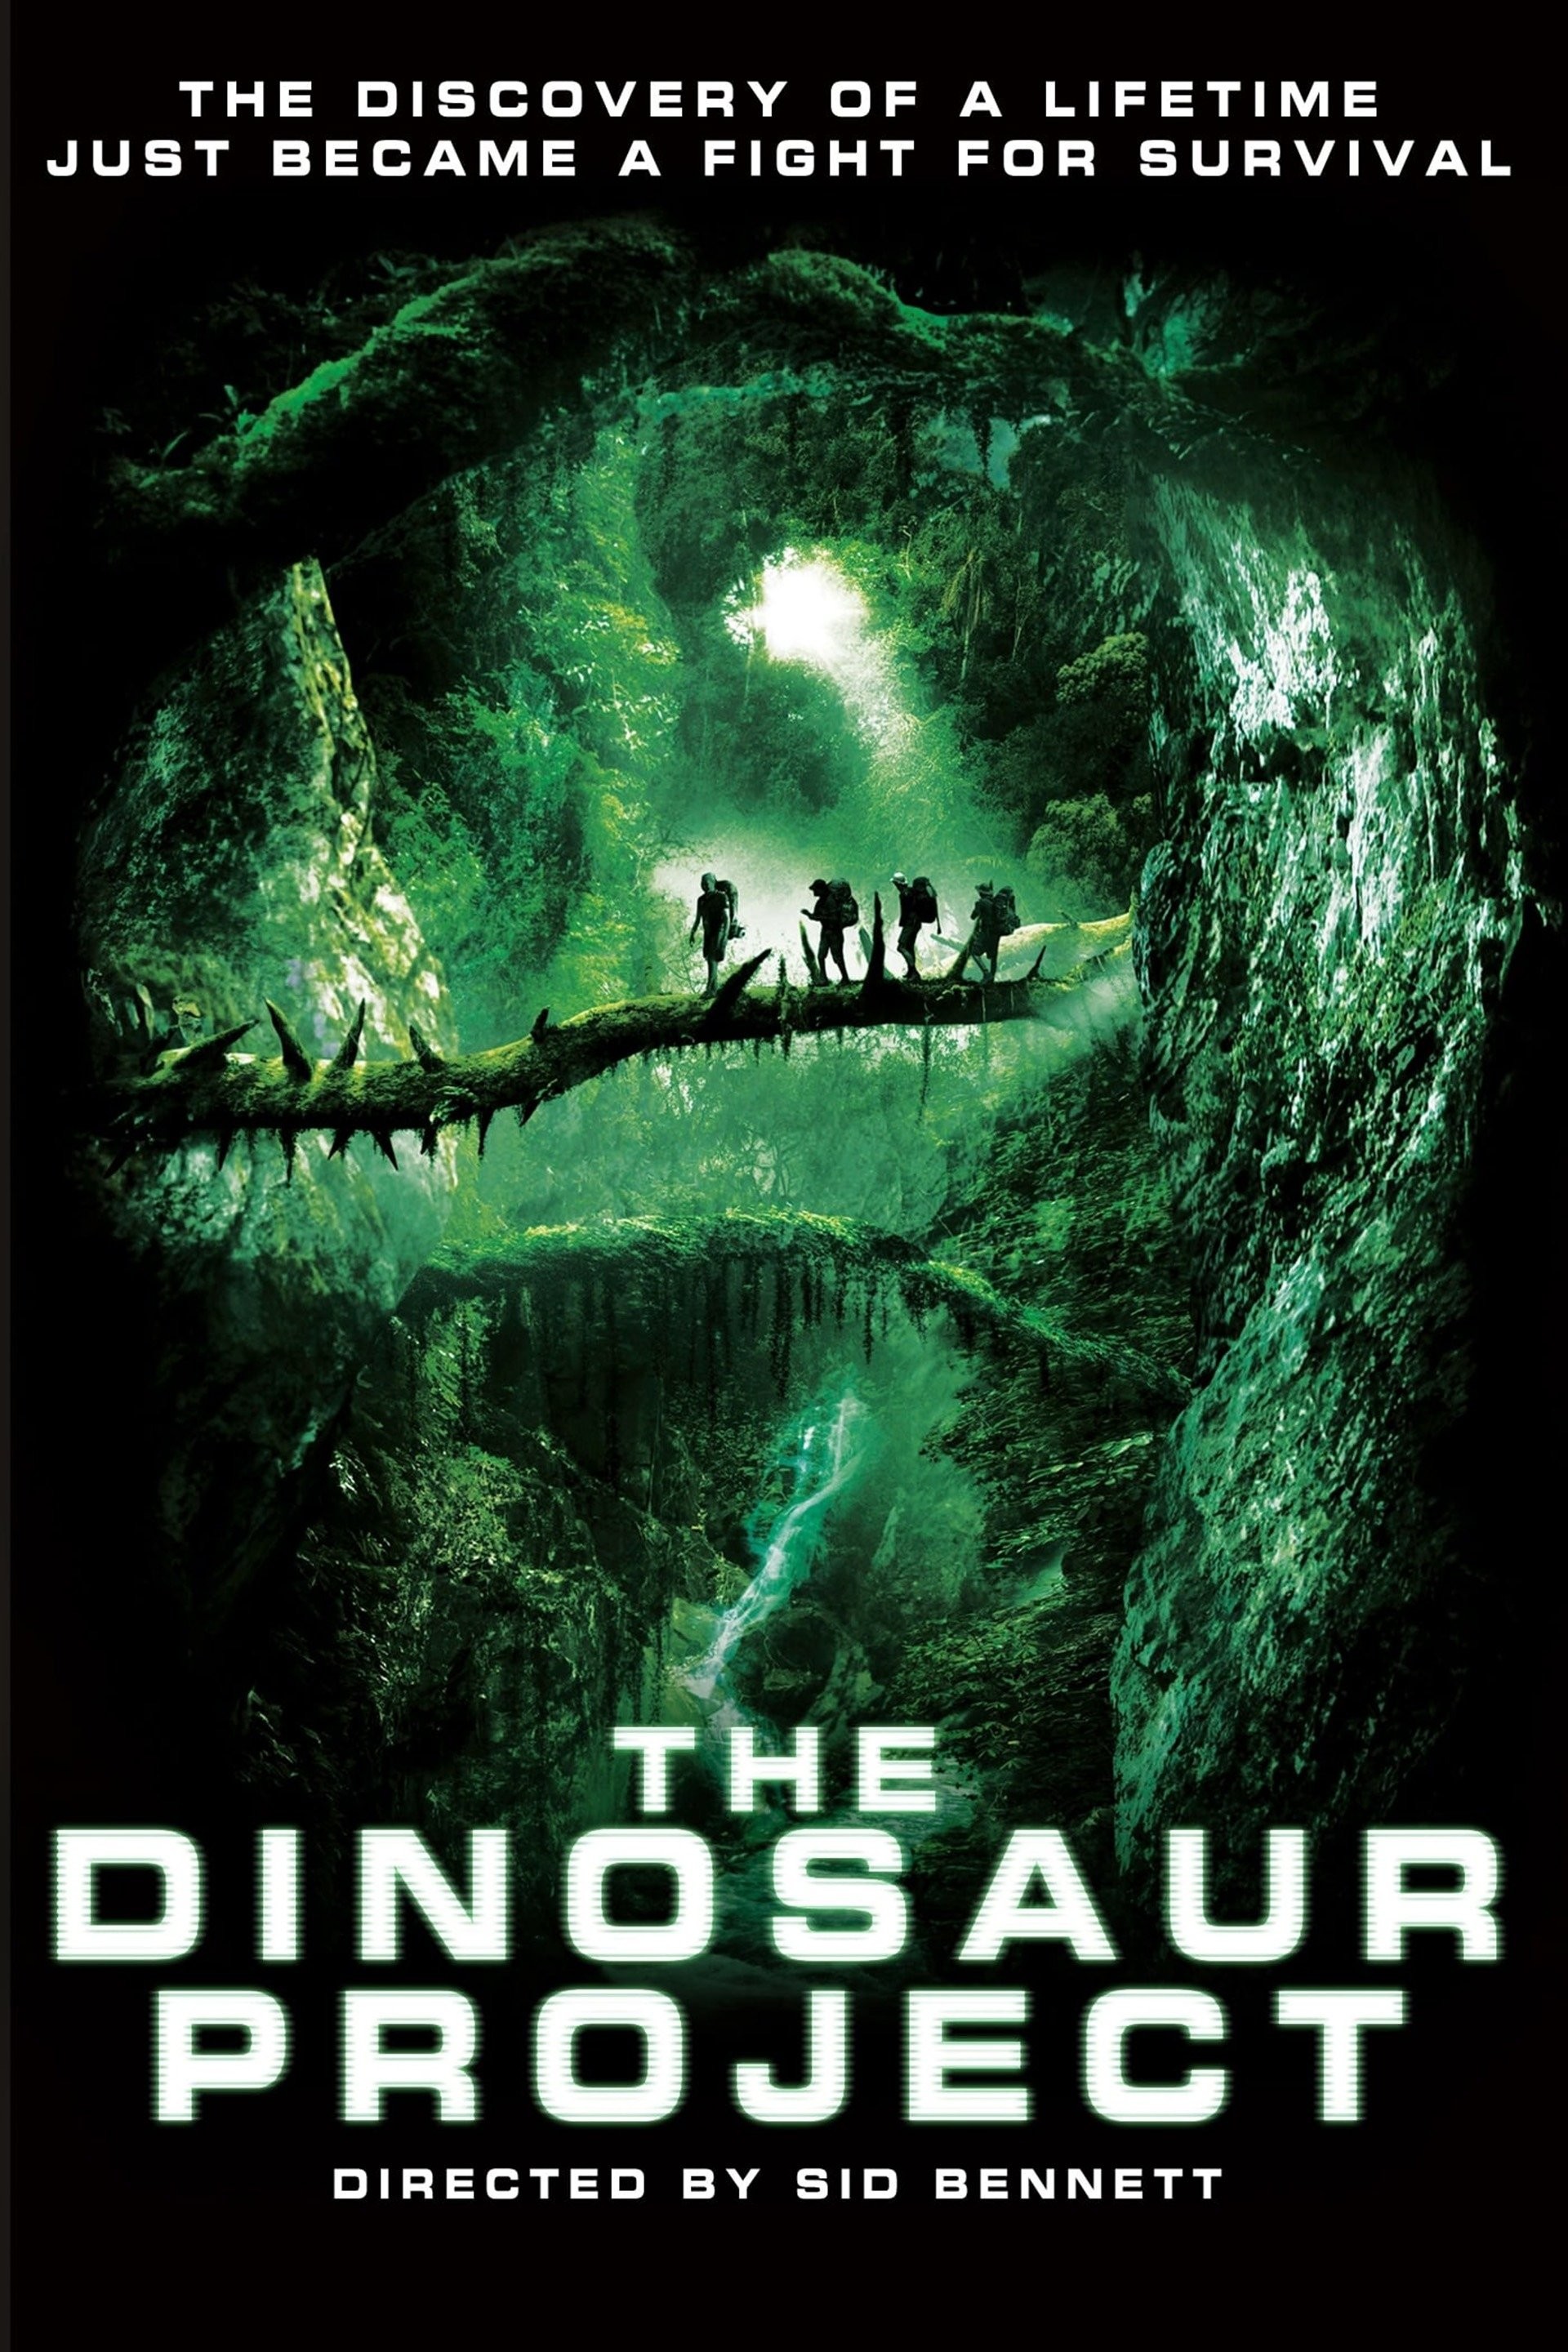 Project poster. Проект про динозавров. Проект динозавр (2011) Постер.